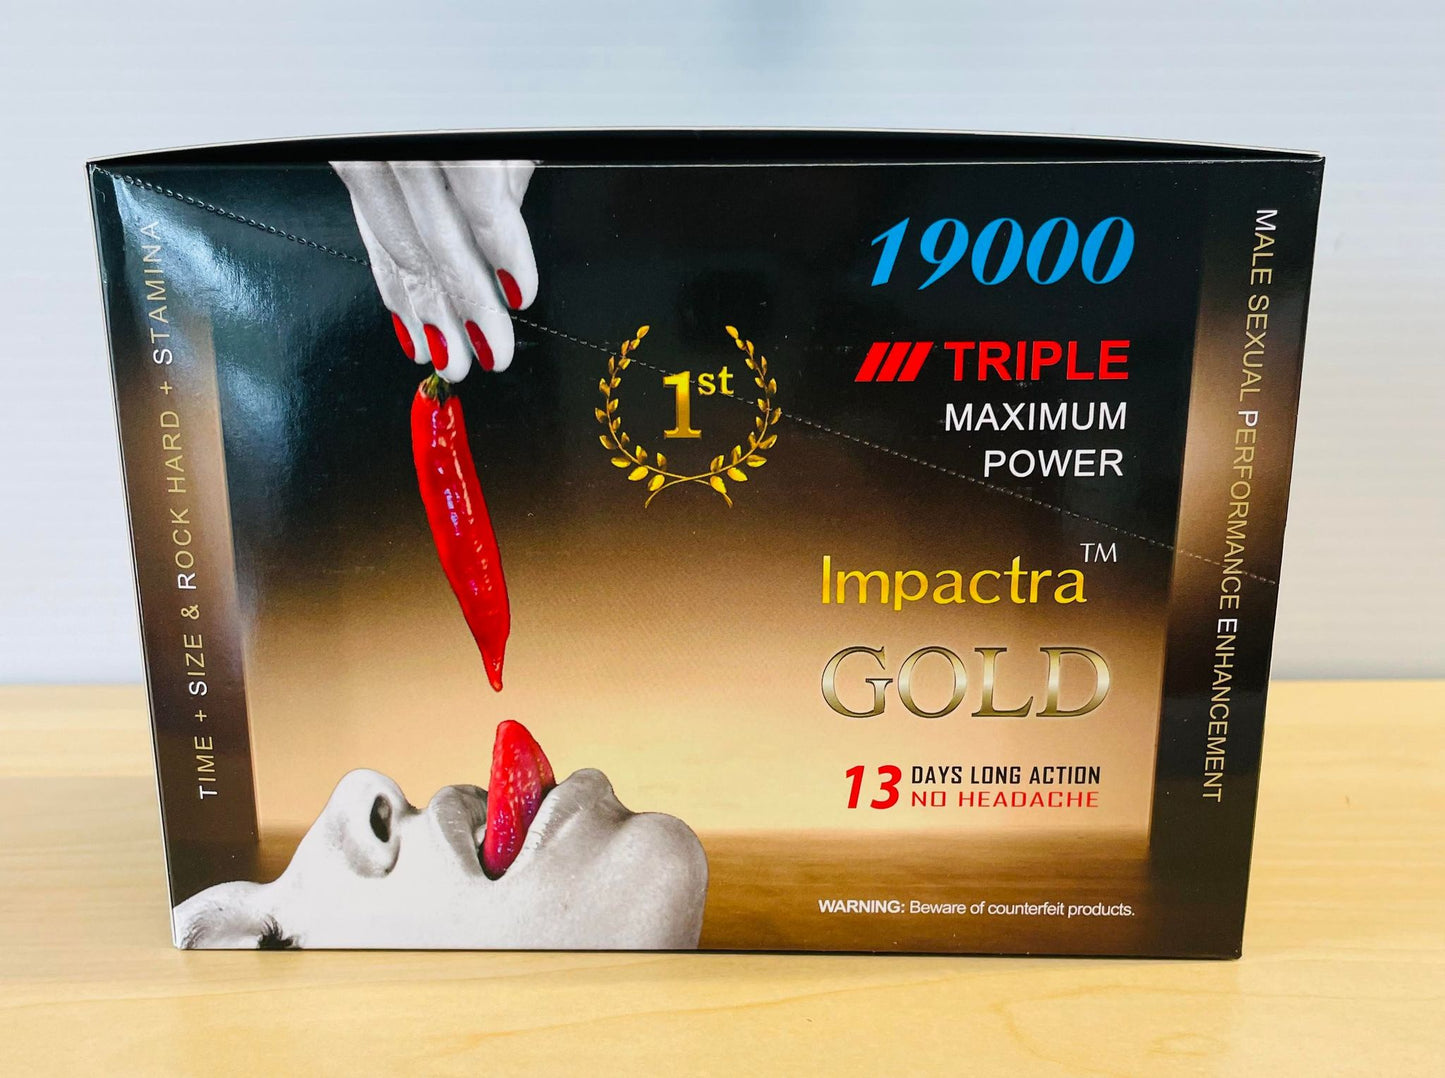 IMPACTRA GOLD 19000